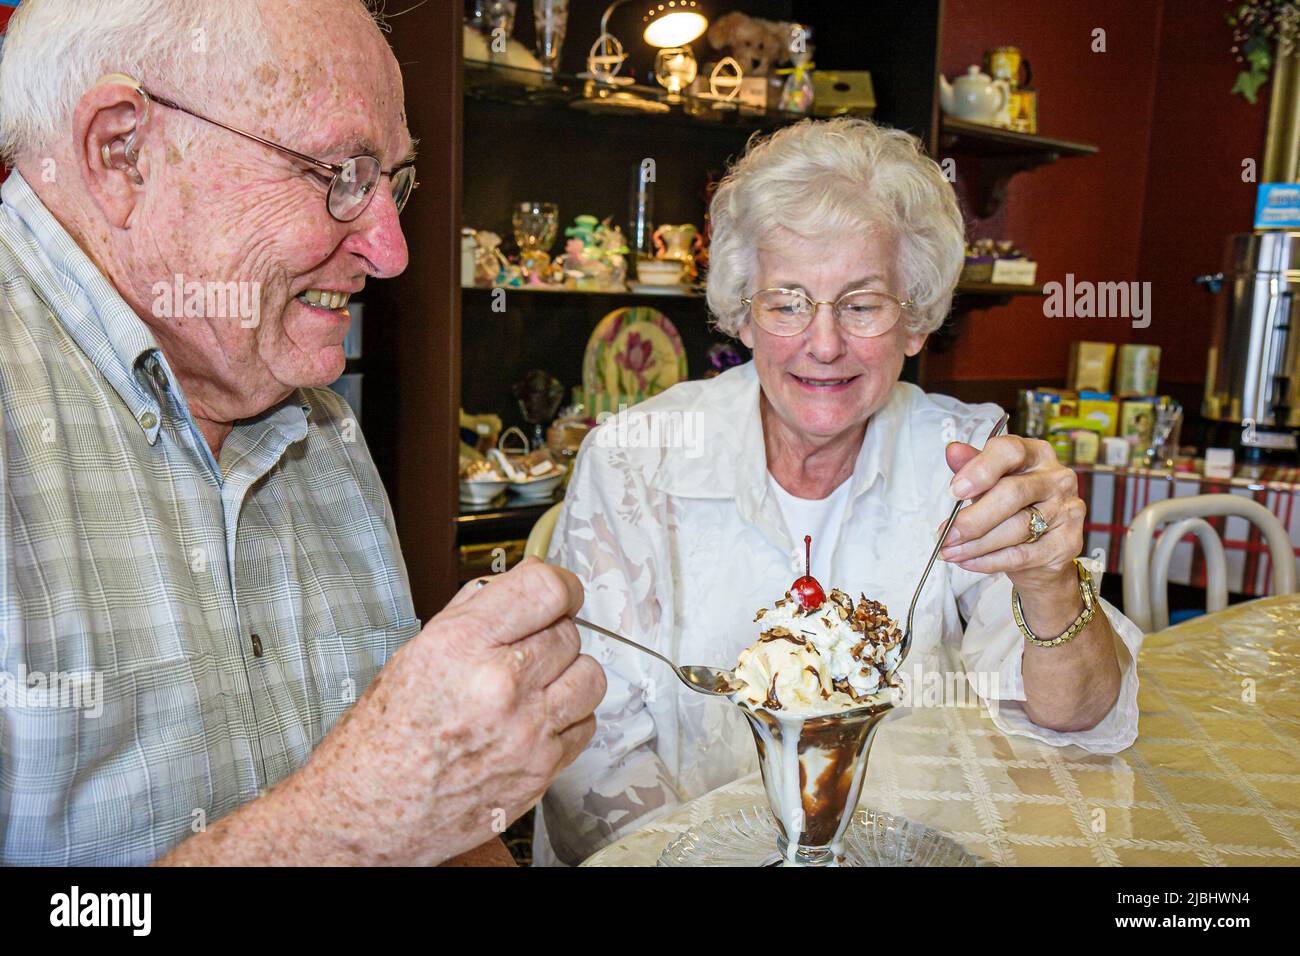 Indiana Kosciusko County,Pierceton,1st Street,Weckmuller Fine Chocolates,jubilados jubilados pareja de helado sundae postre pareja Foto de stock